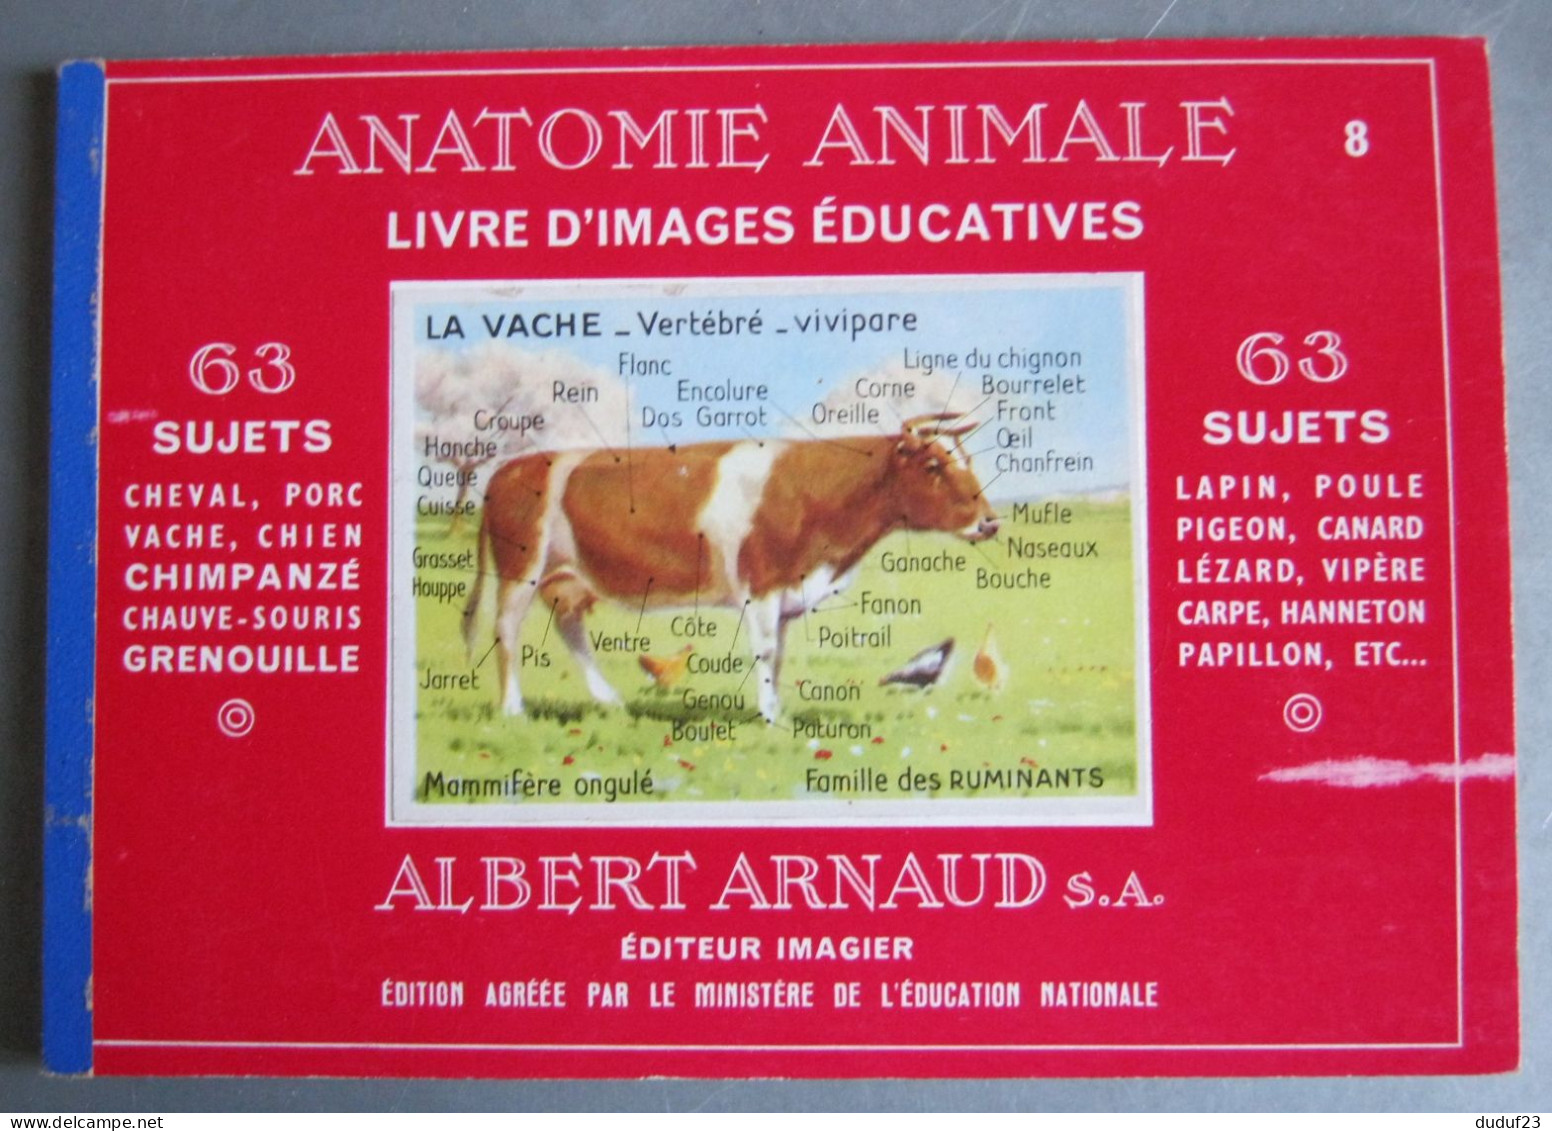 LIVRE D'IMAGES EDUCATIVES N°8 ANATOMIE ANIMALE ALBERT ARNAUD 63 SUJETS CIRCA 1960 - Sammelbilder